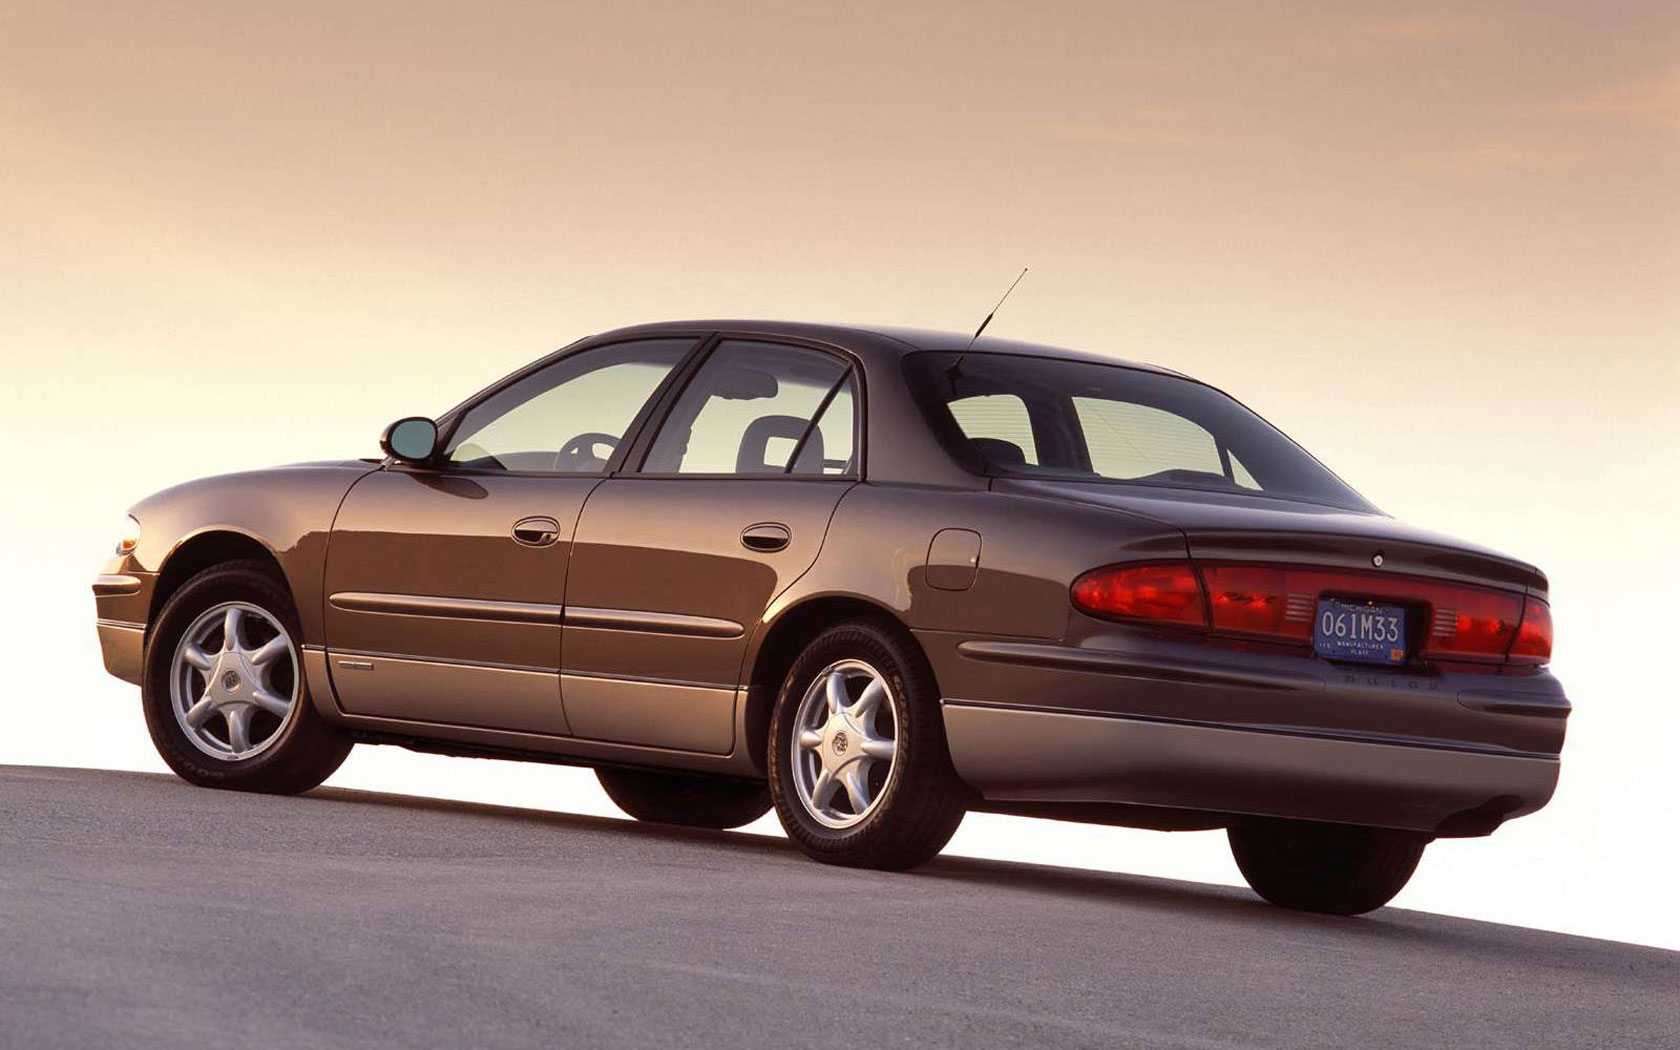  Buick Regal (1997-2004)